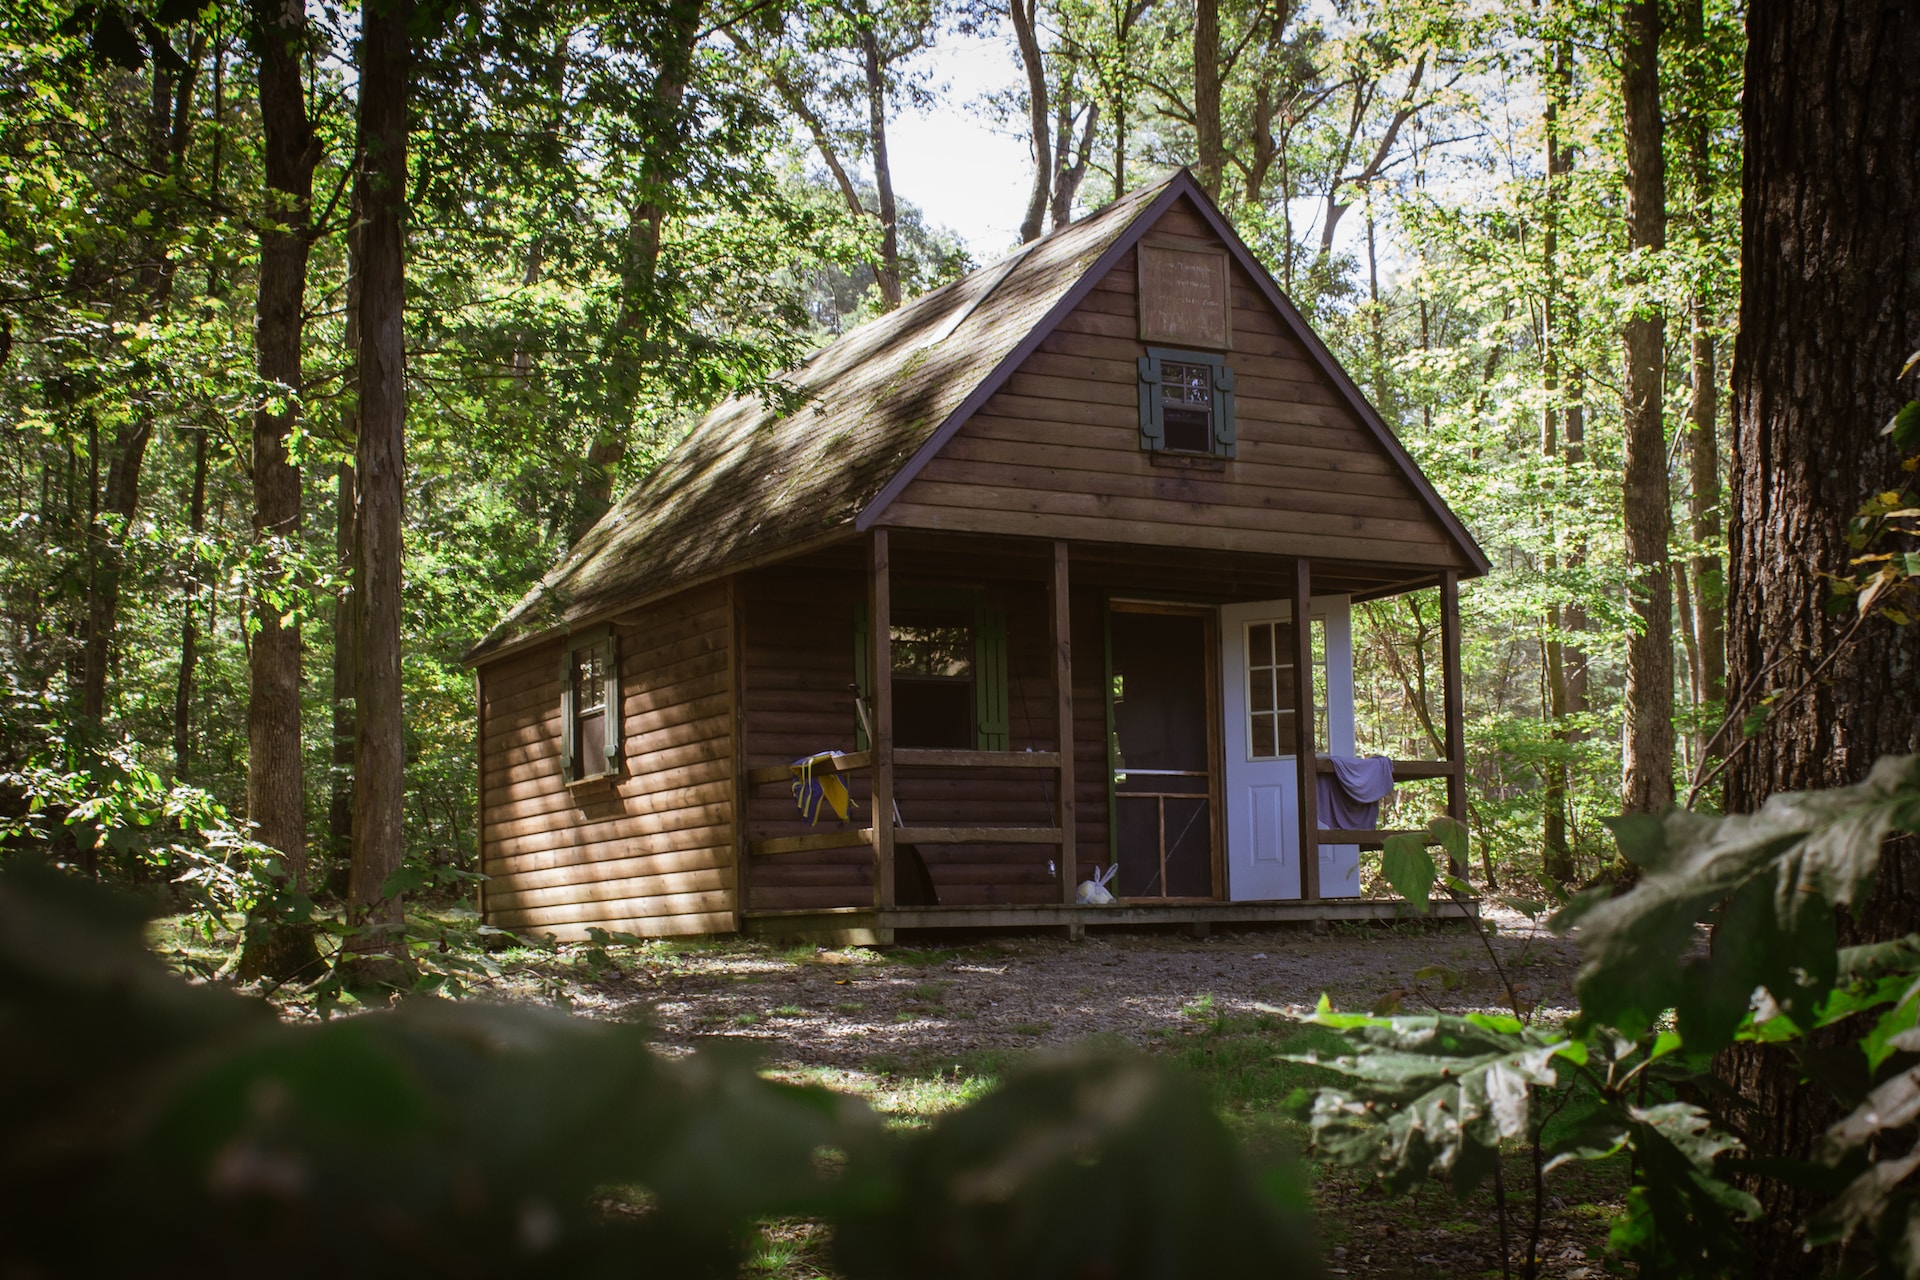 Cabin in the woods of Broken Bow.